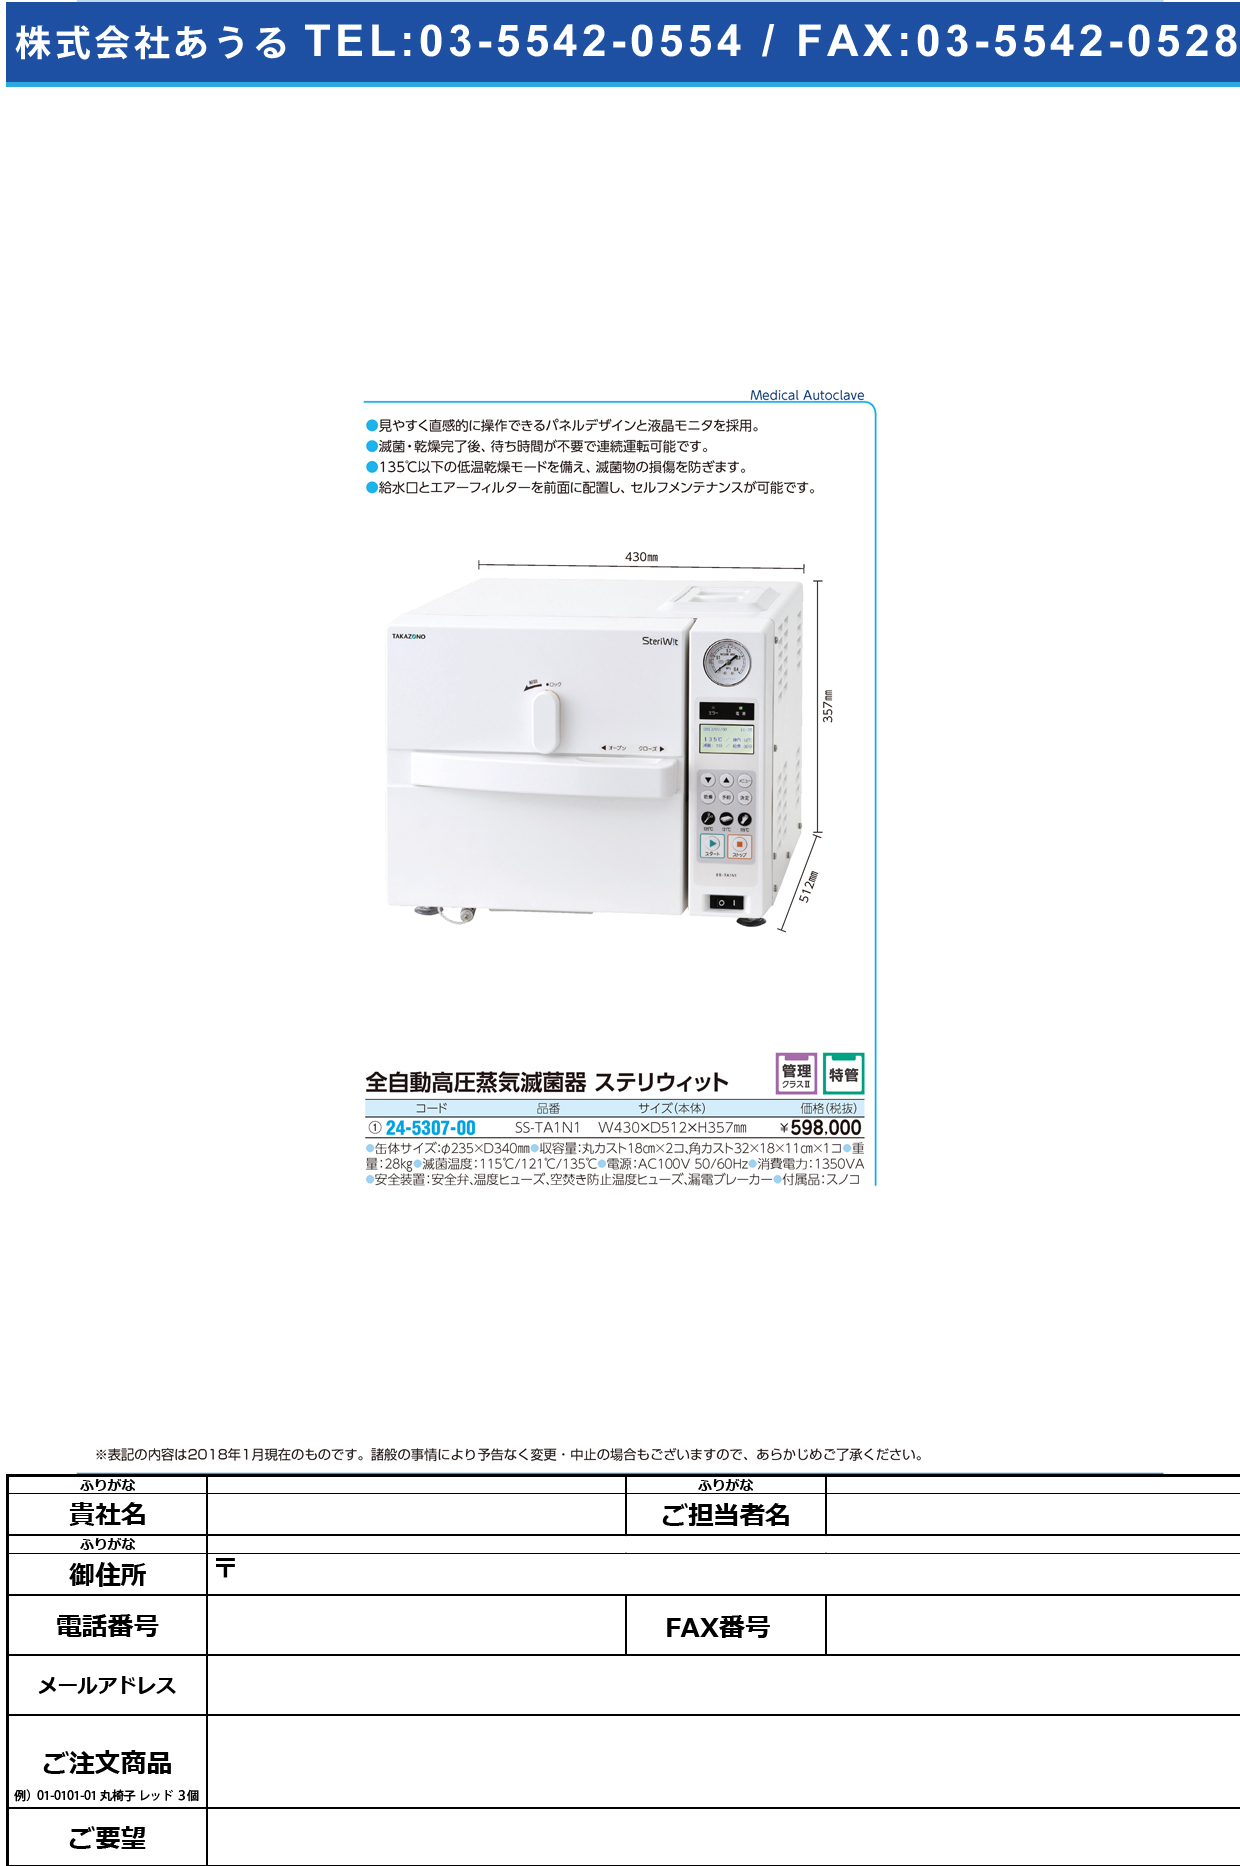 (24-5307-00)高圧蒸気滅菌器ステリウィット SS-TA1N1 ｺｳｱﾂｼﾞｮｳｷﾒｯｷﾝｷｽﾃﾘｳｨｯ【1台単位】【2019年カタログ商品】